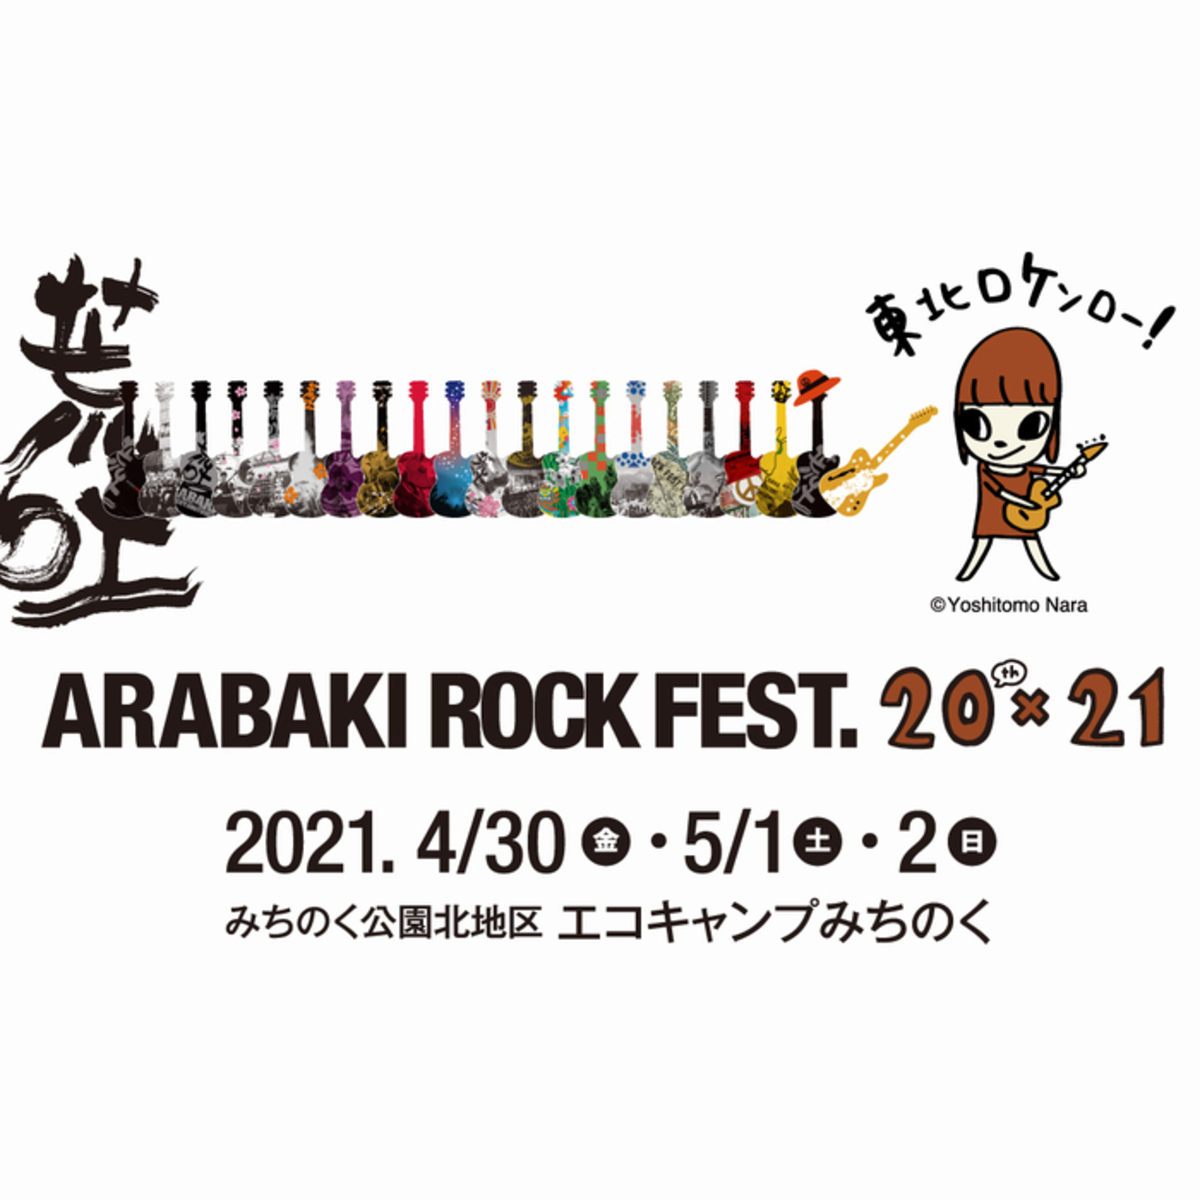 ARABAKI ROCK FEST. 1日入場券4/28 - チケット